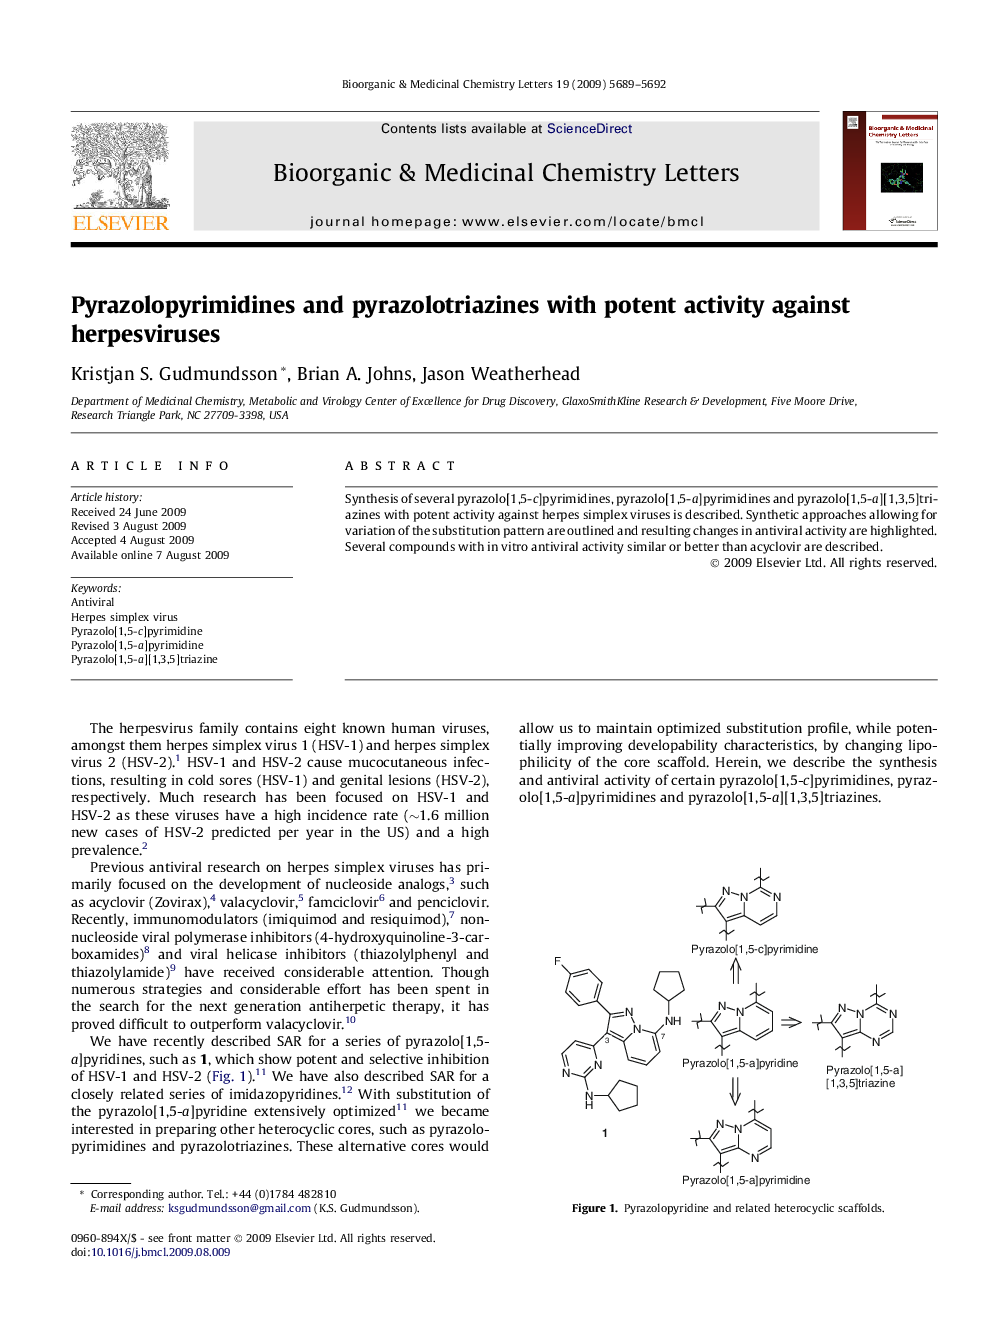 Pyrazolopyrimidines and pyrazolotriazines with potent activity against herpesviruses